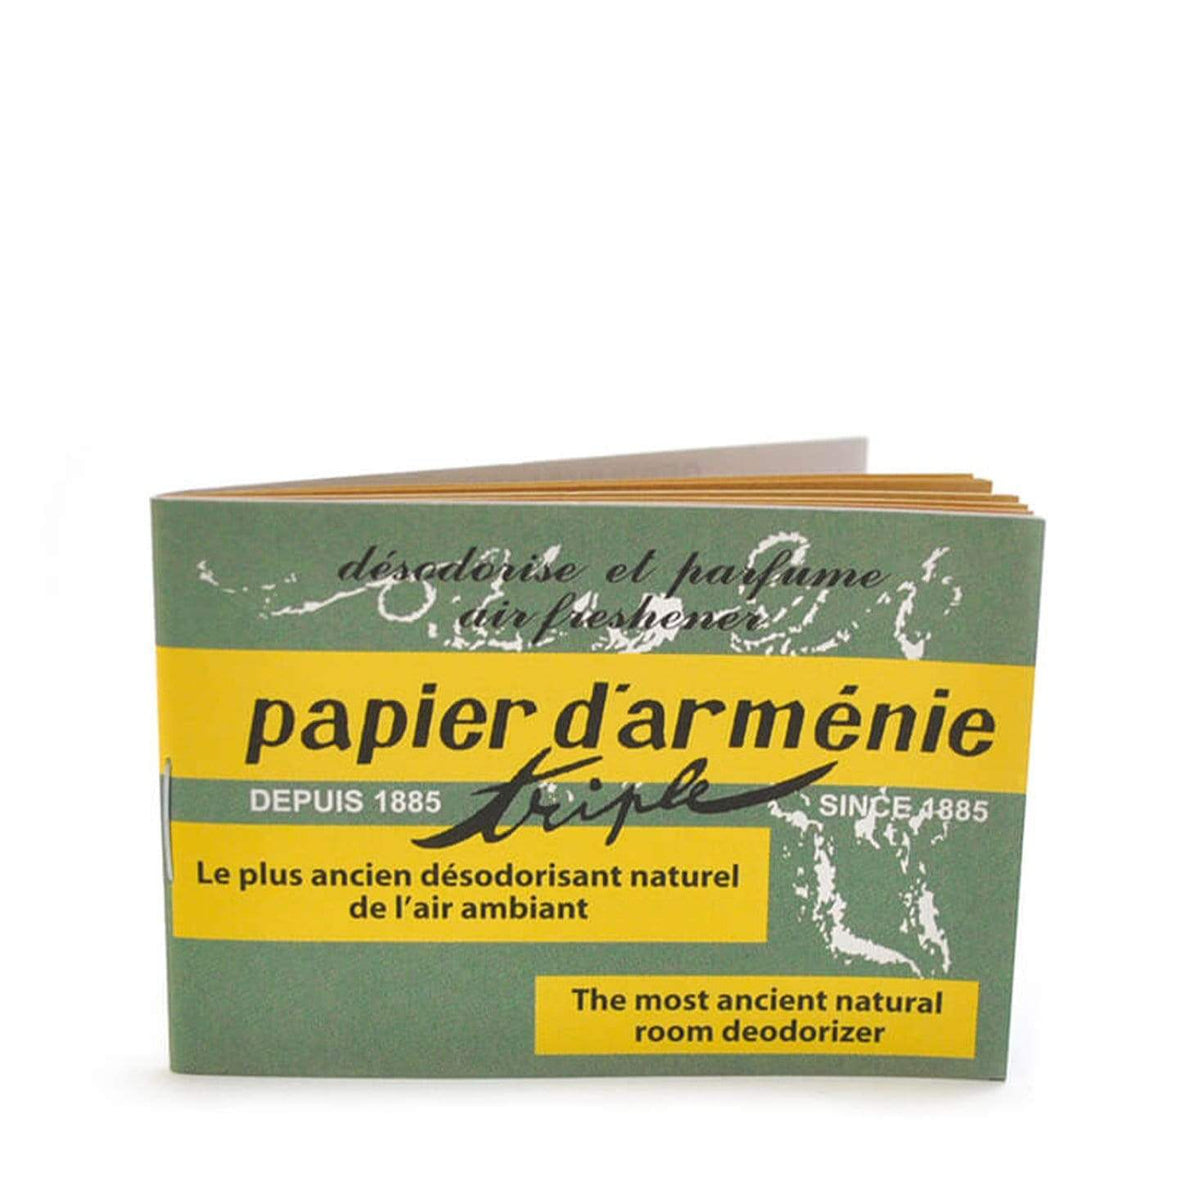 Buy Paper Incense: Original Aromatic Paper Incense Carta Aromatica D'eritrea  Original Booklet / 24 Strips Like Papier Darmenie Italian Resin Online in  India 